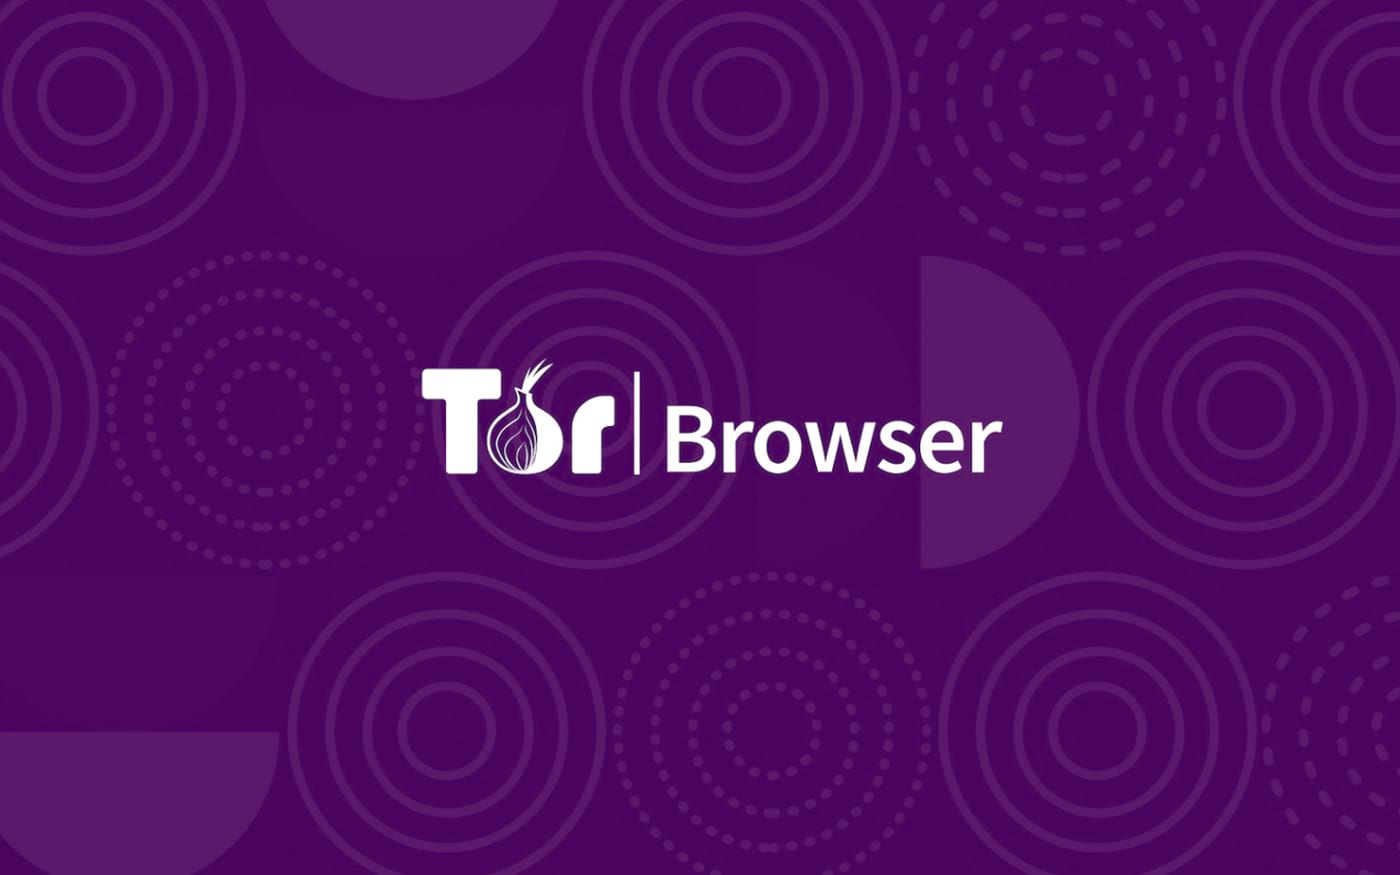 key tor browser hudra